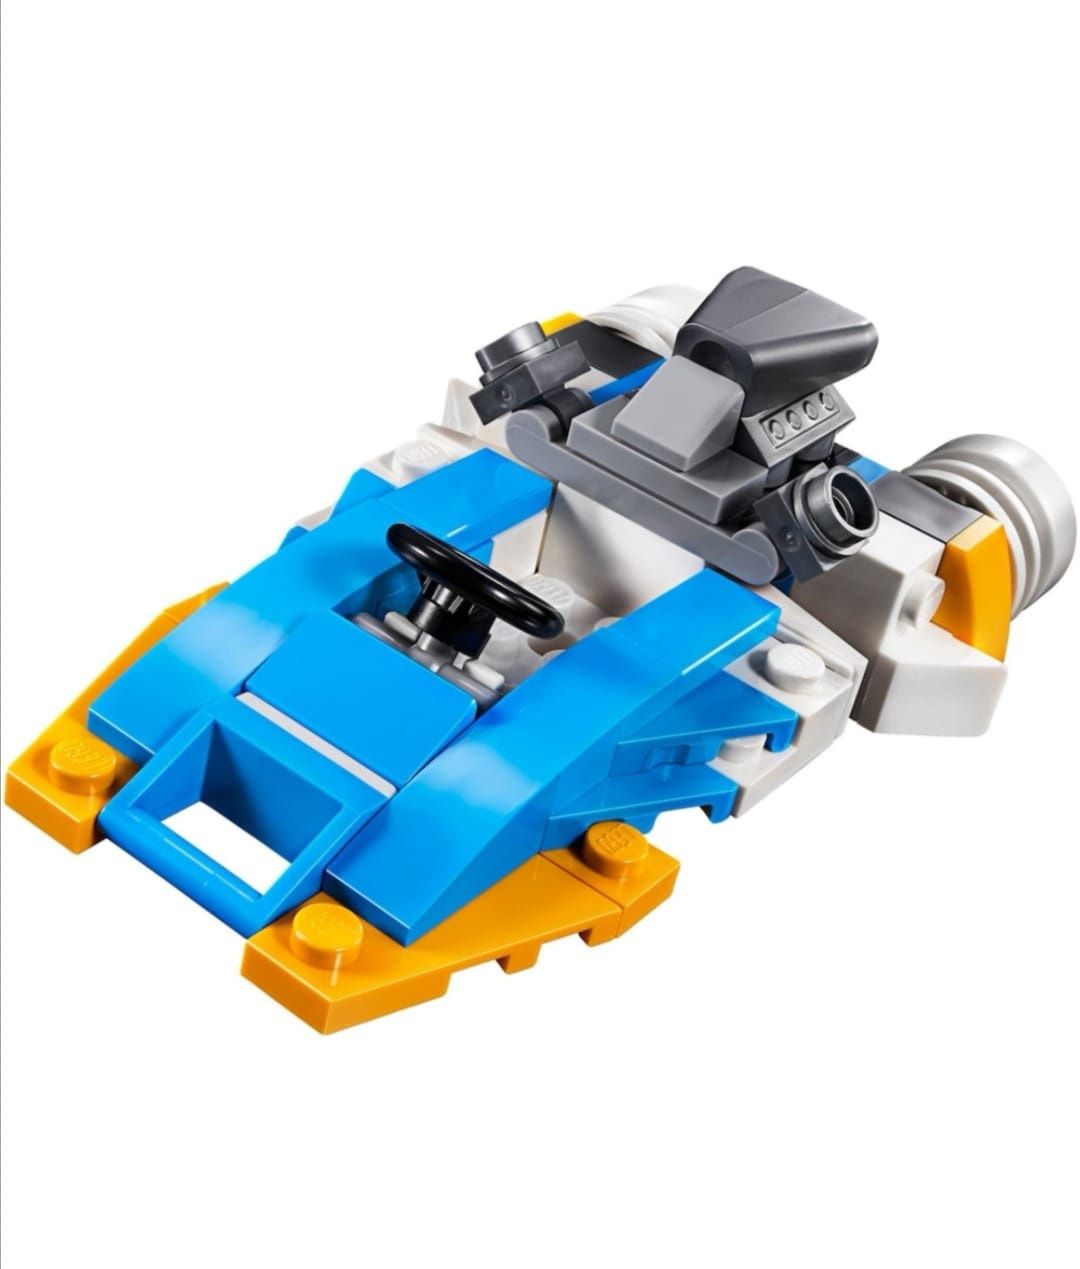 Lego creator Motoare extreme cod - 31072